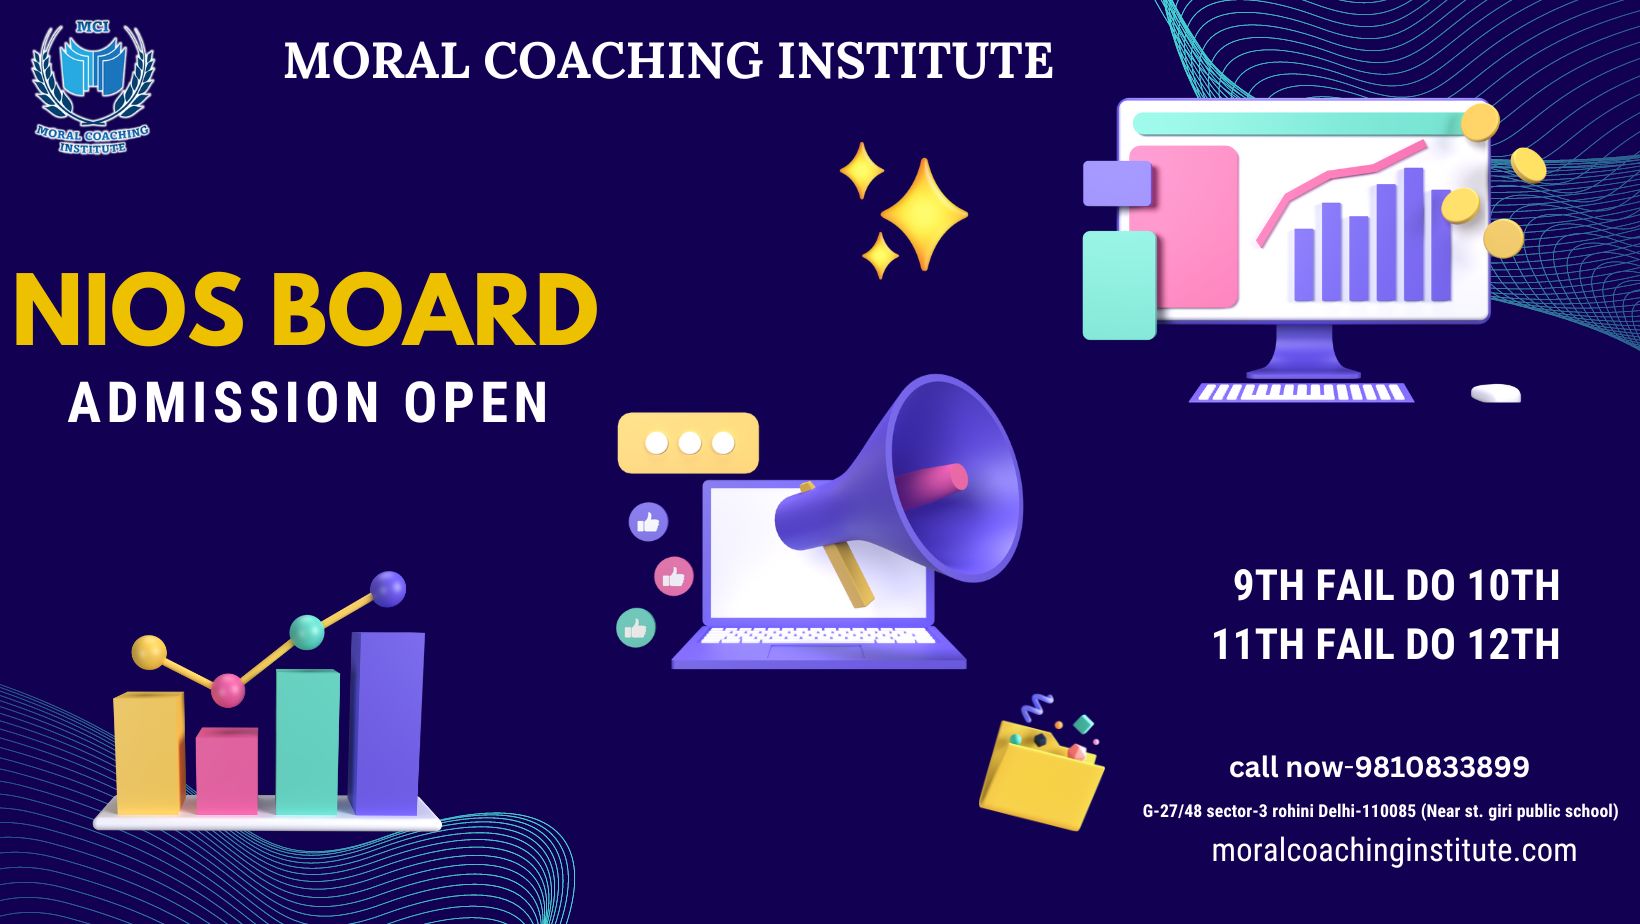 moral coaching institute